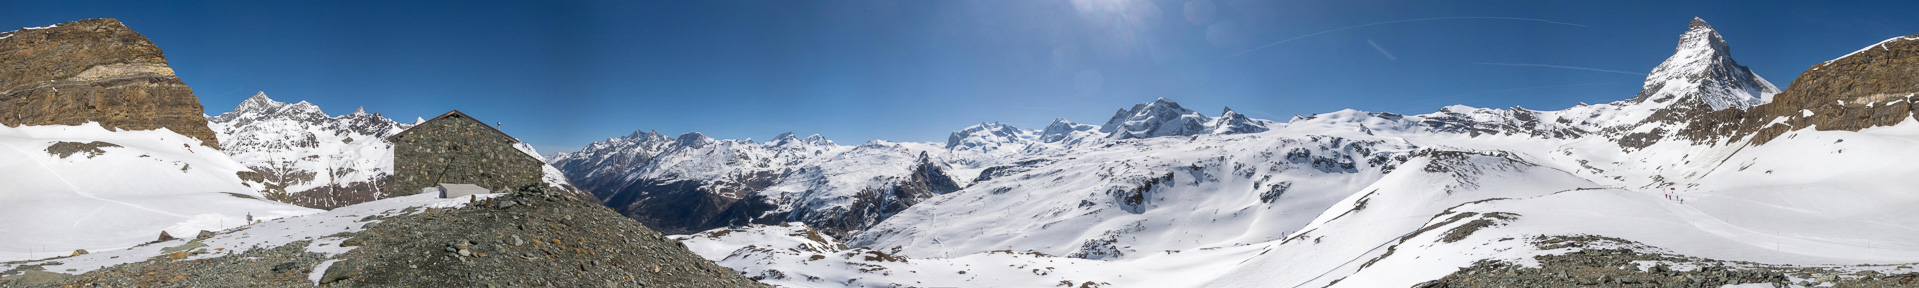 Blick ins Zermatter Skigebiet.